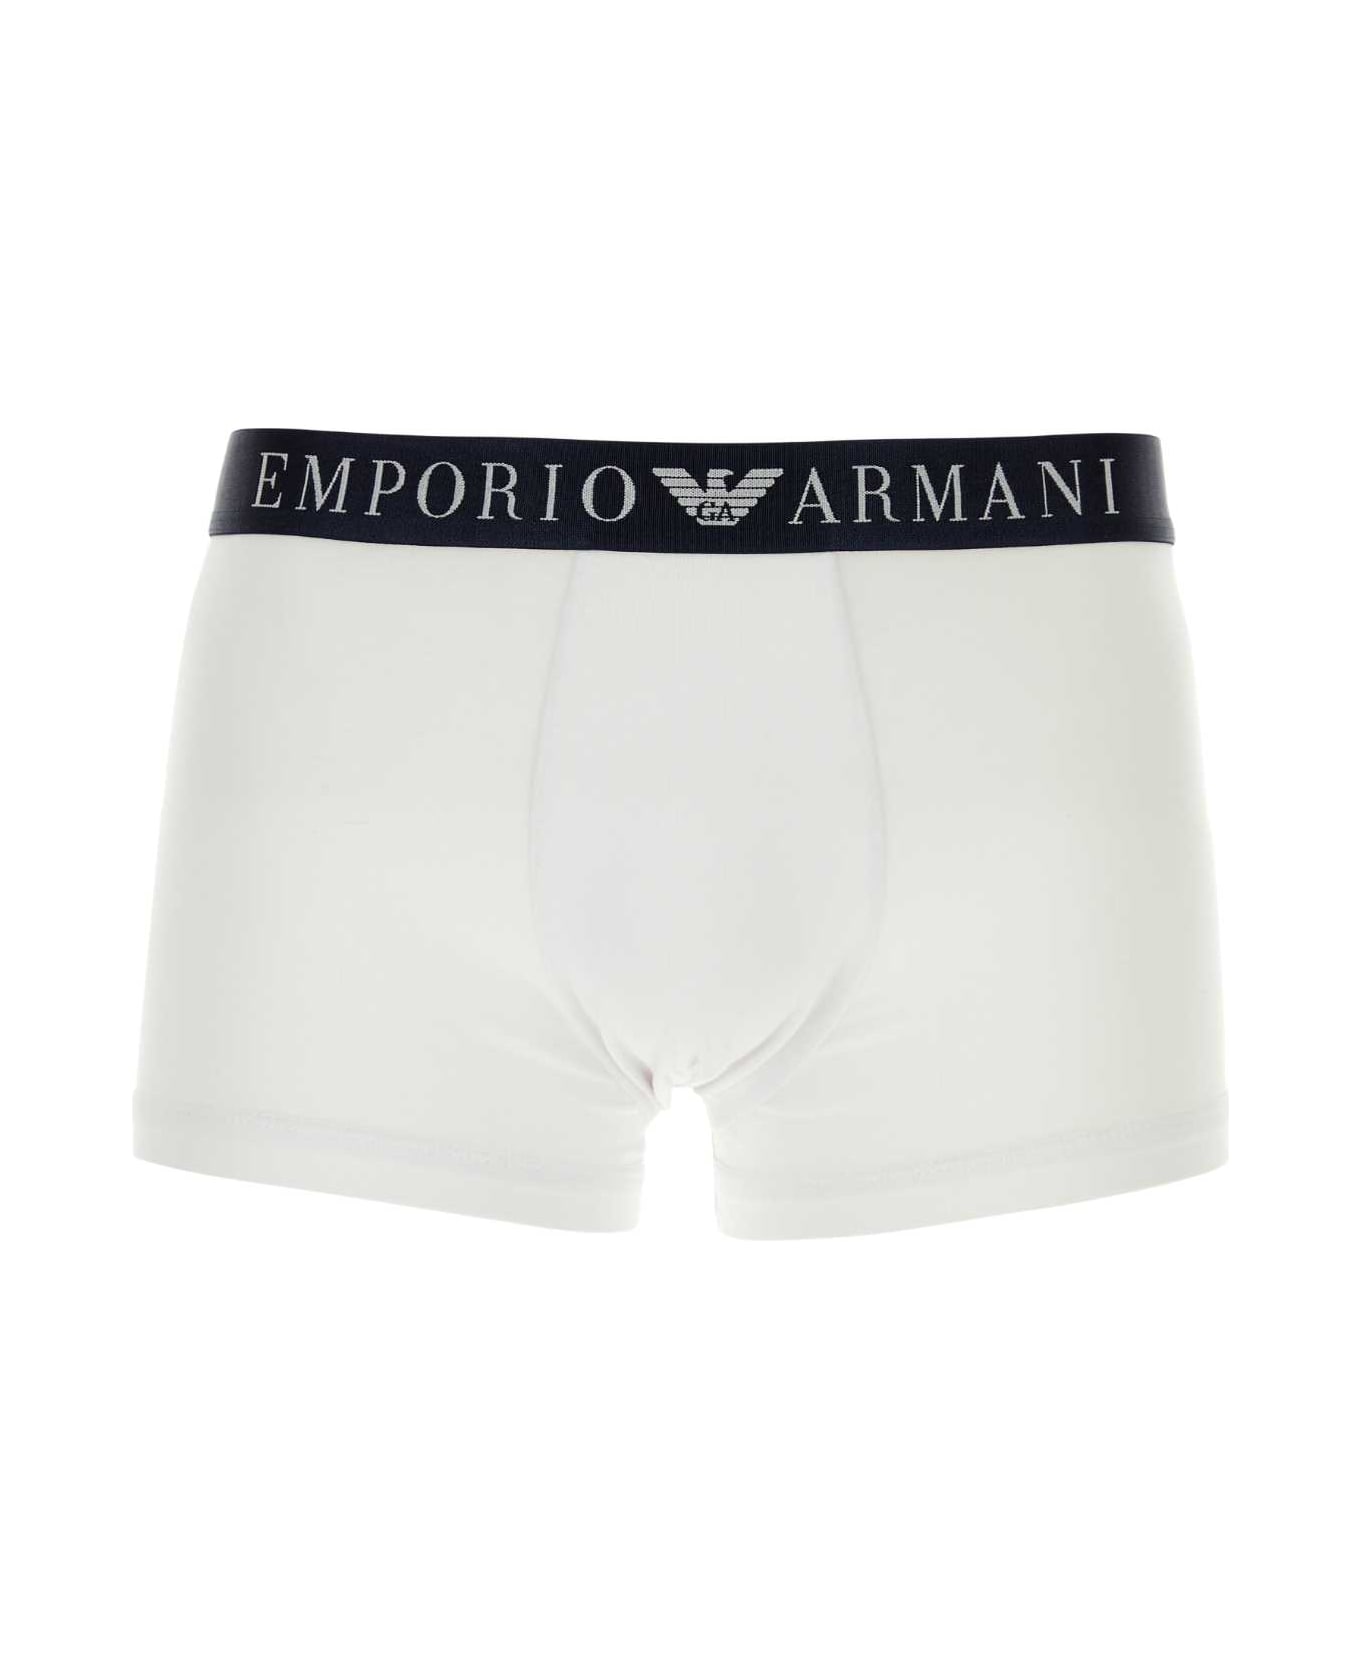 Emporio Armani White Stretch Cotton Boxer - 00010 アンダーウェア